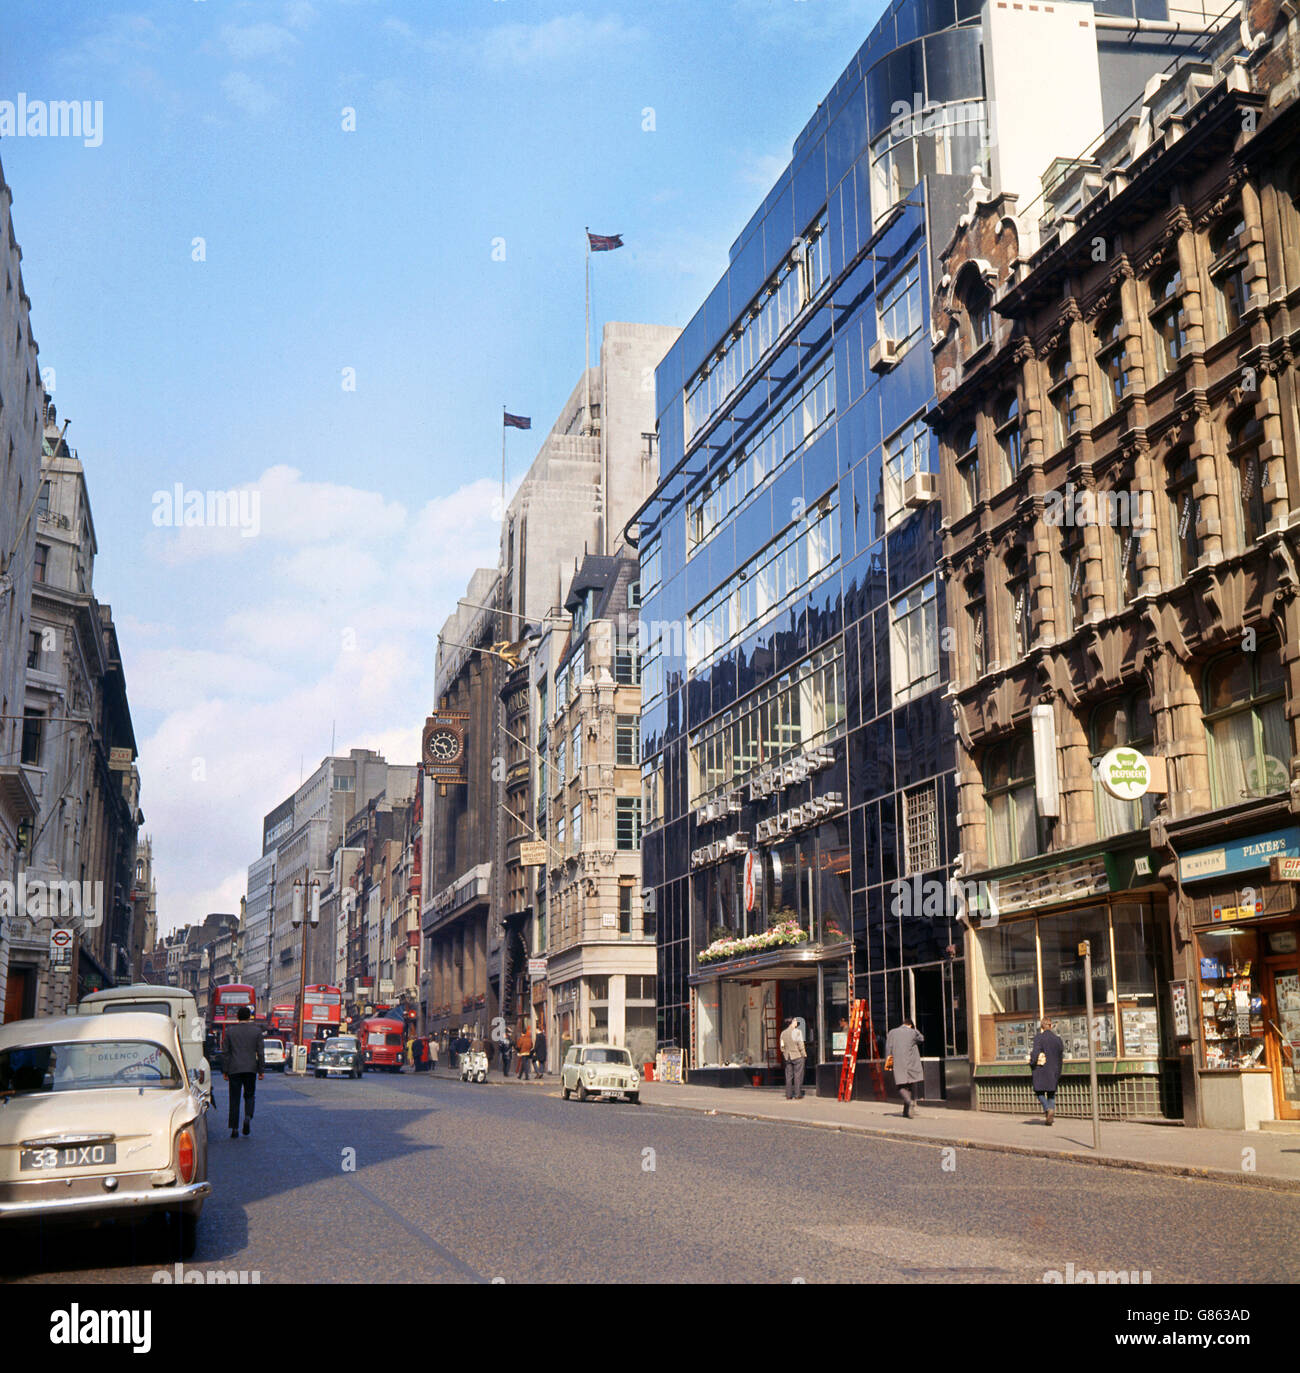 London Scenes - Fleet Street. View of Fleet Street from Ludgate House, London. Stock Photo